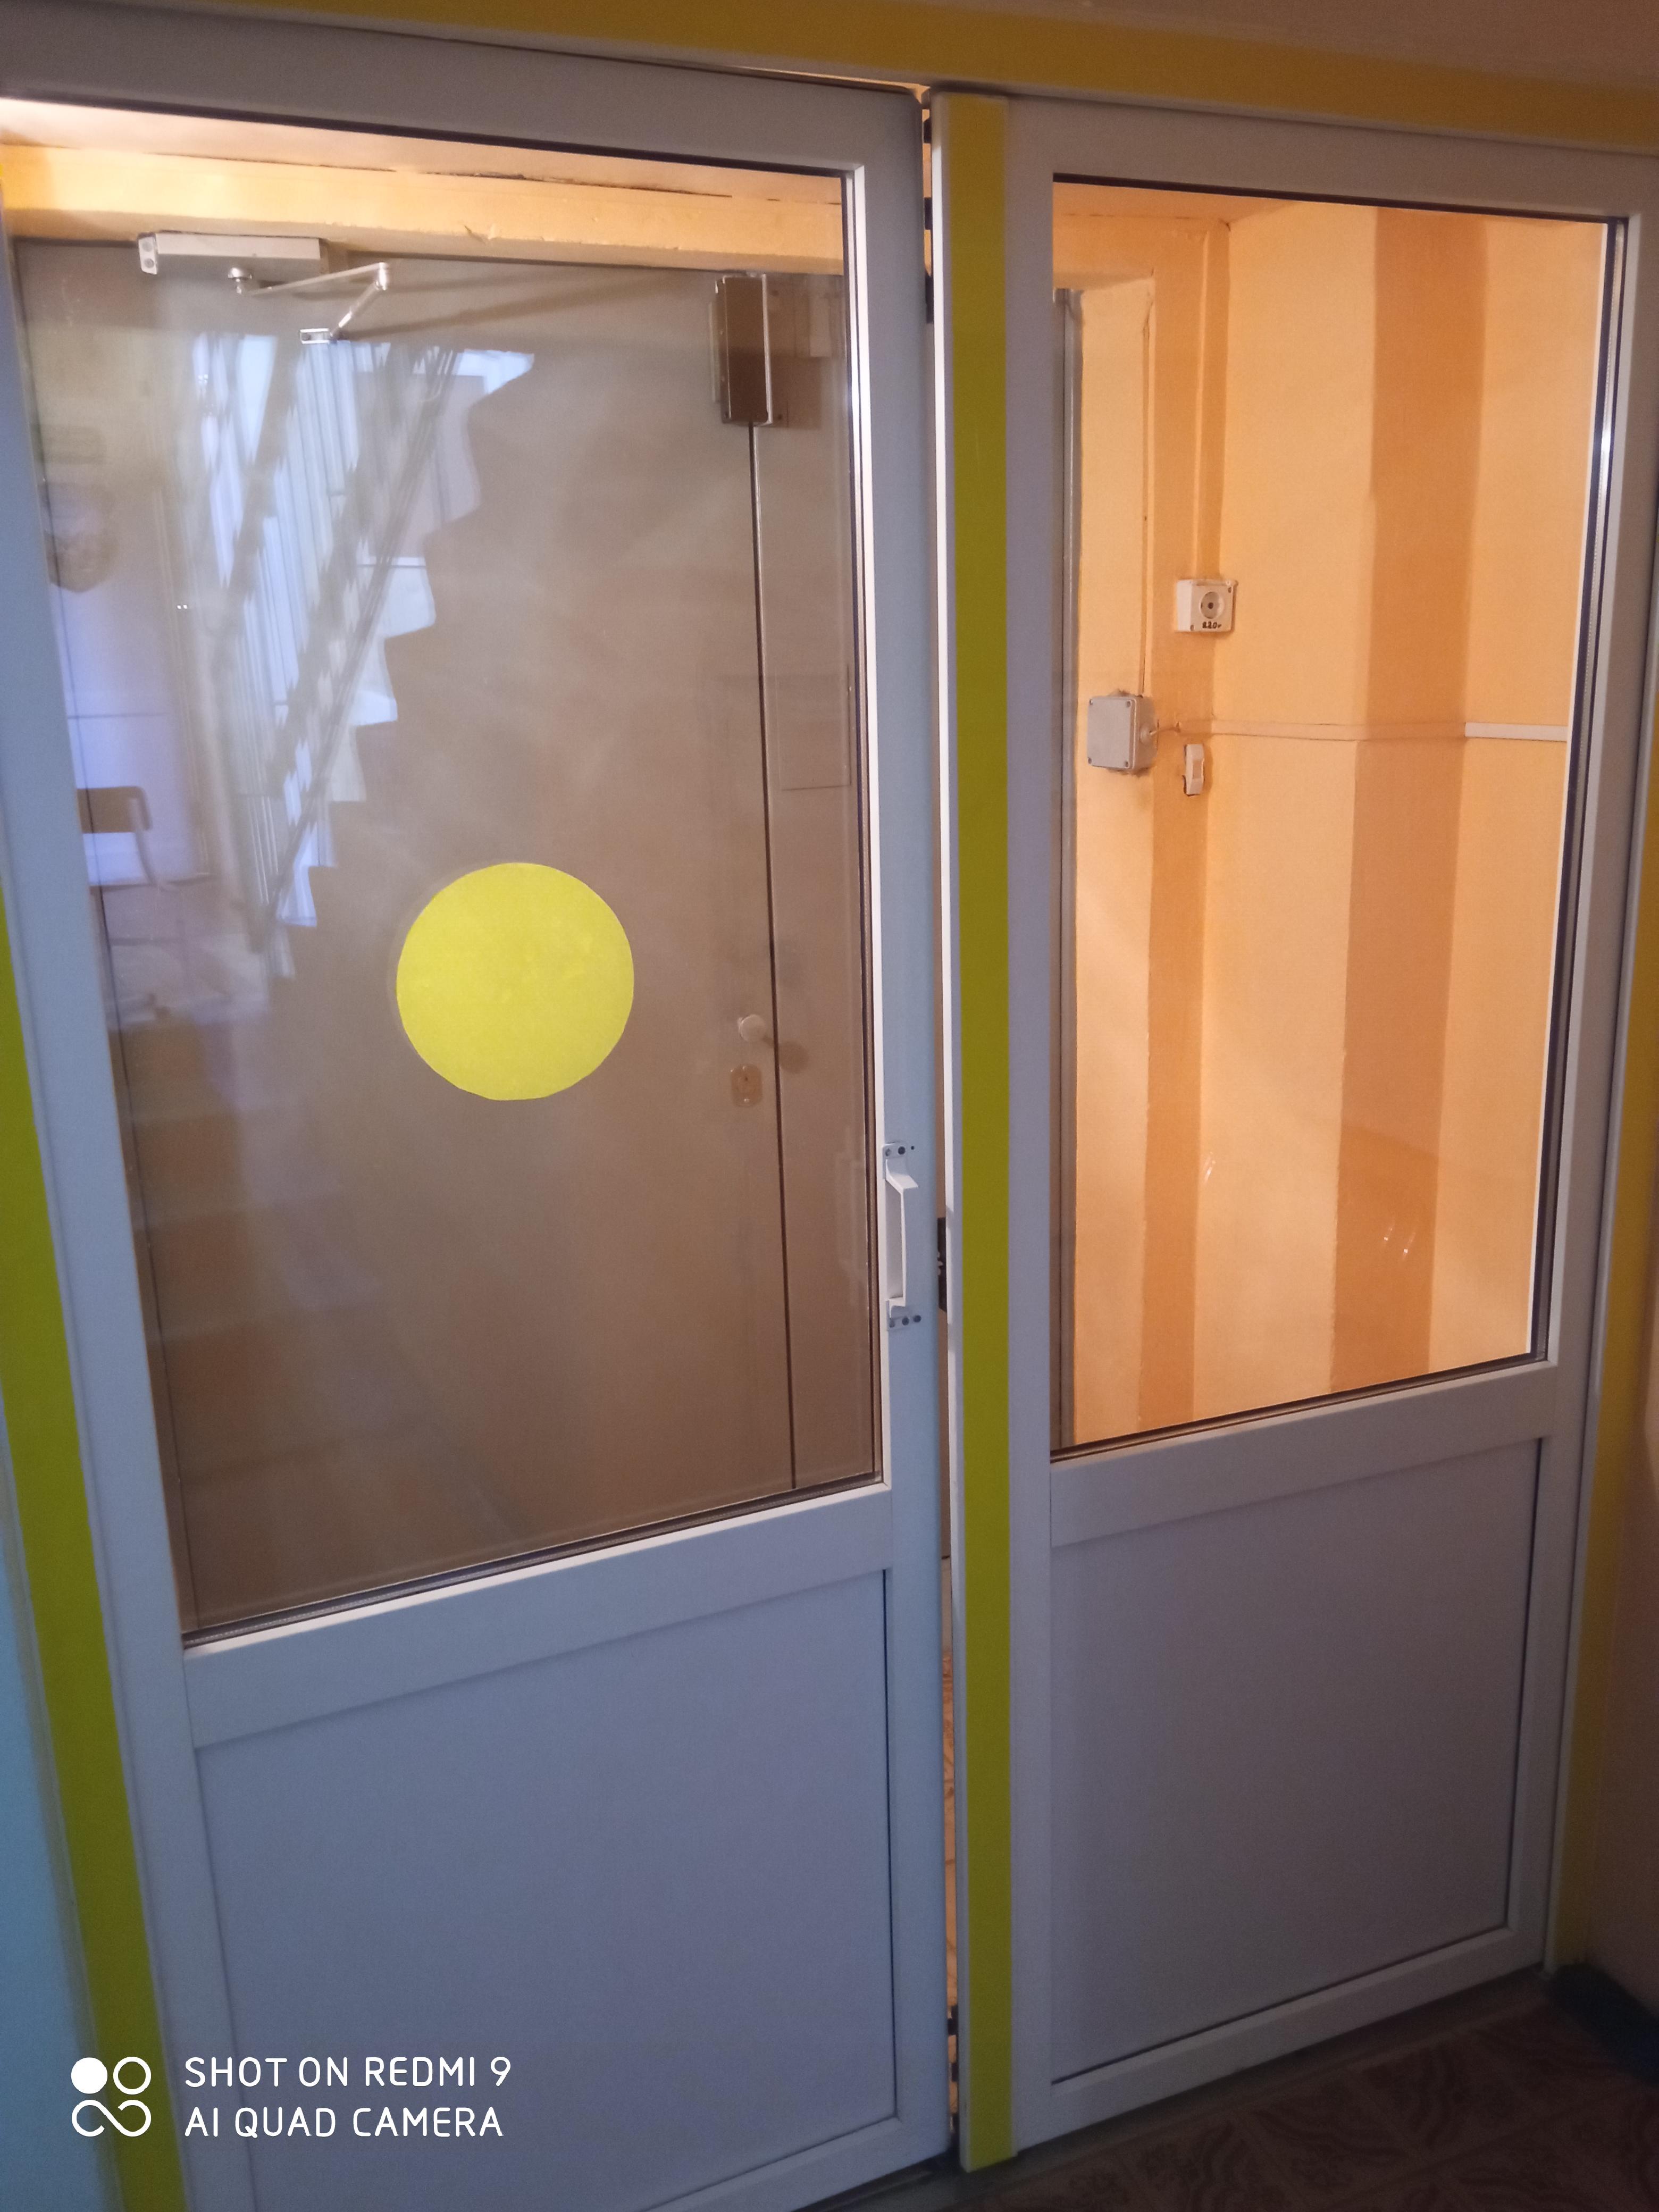 желтый круг стекляная дверь.jpg